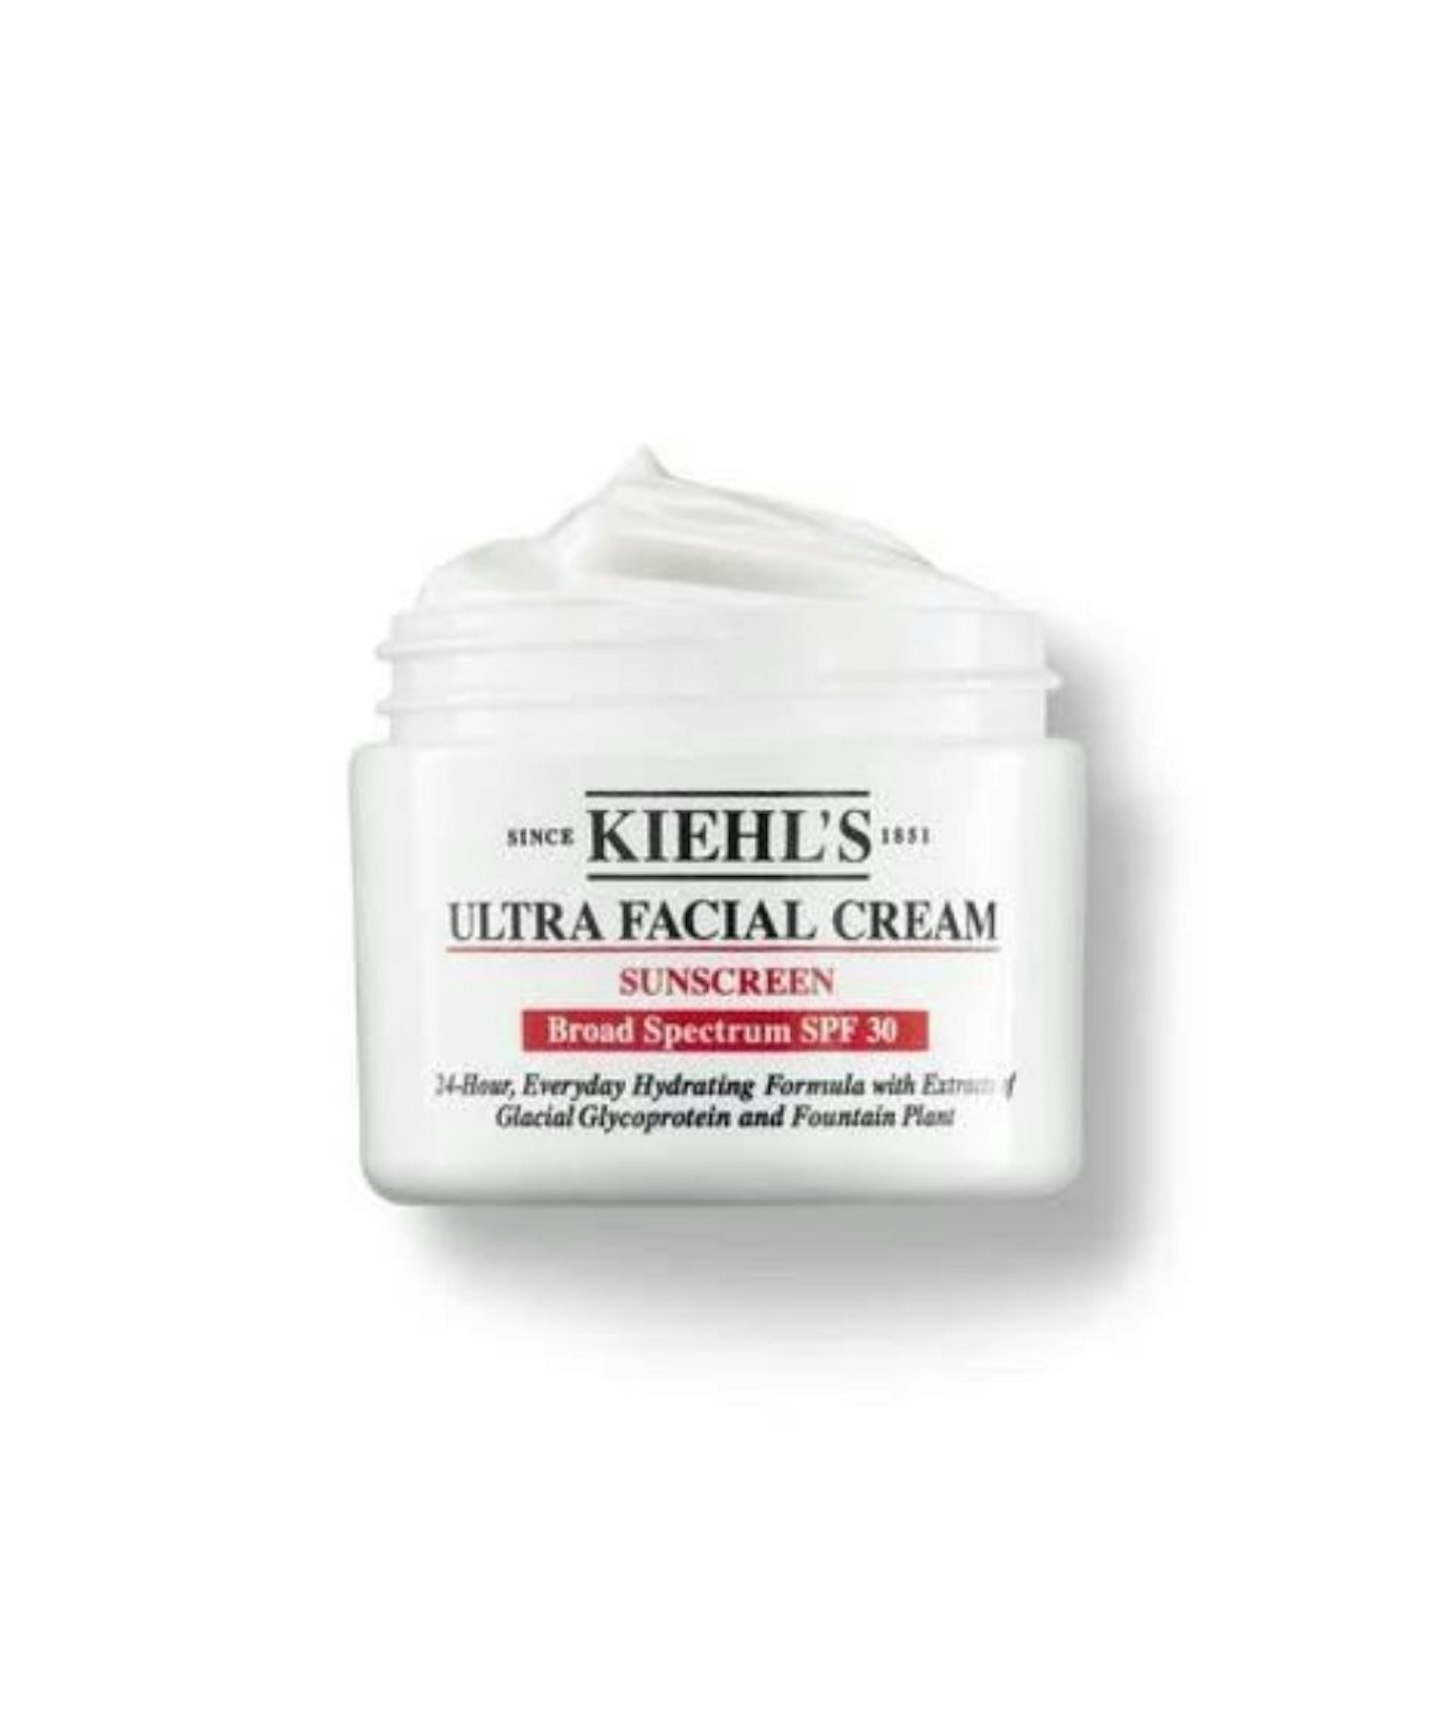 Kiehlu2019s Ultra Facial Cream SPF 30